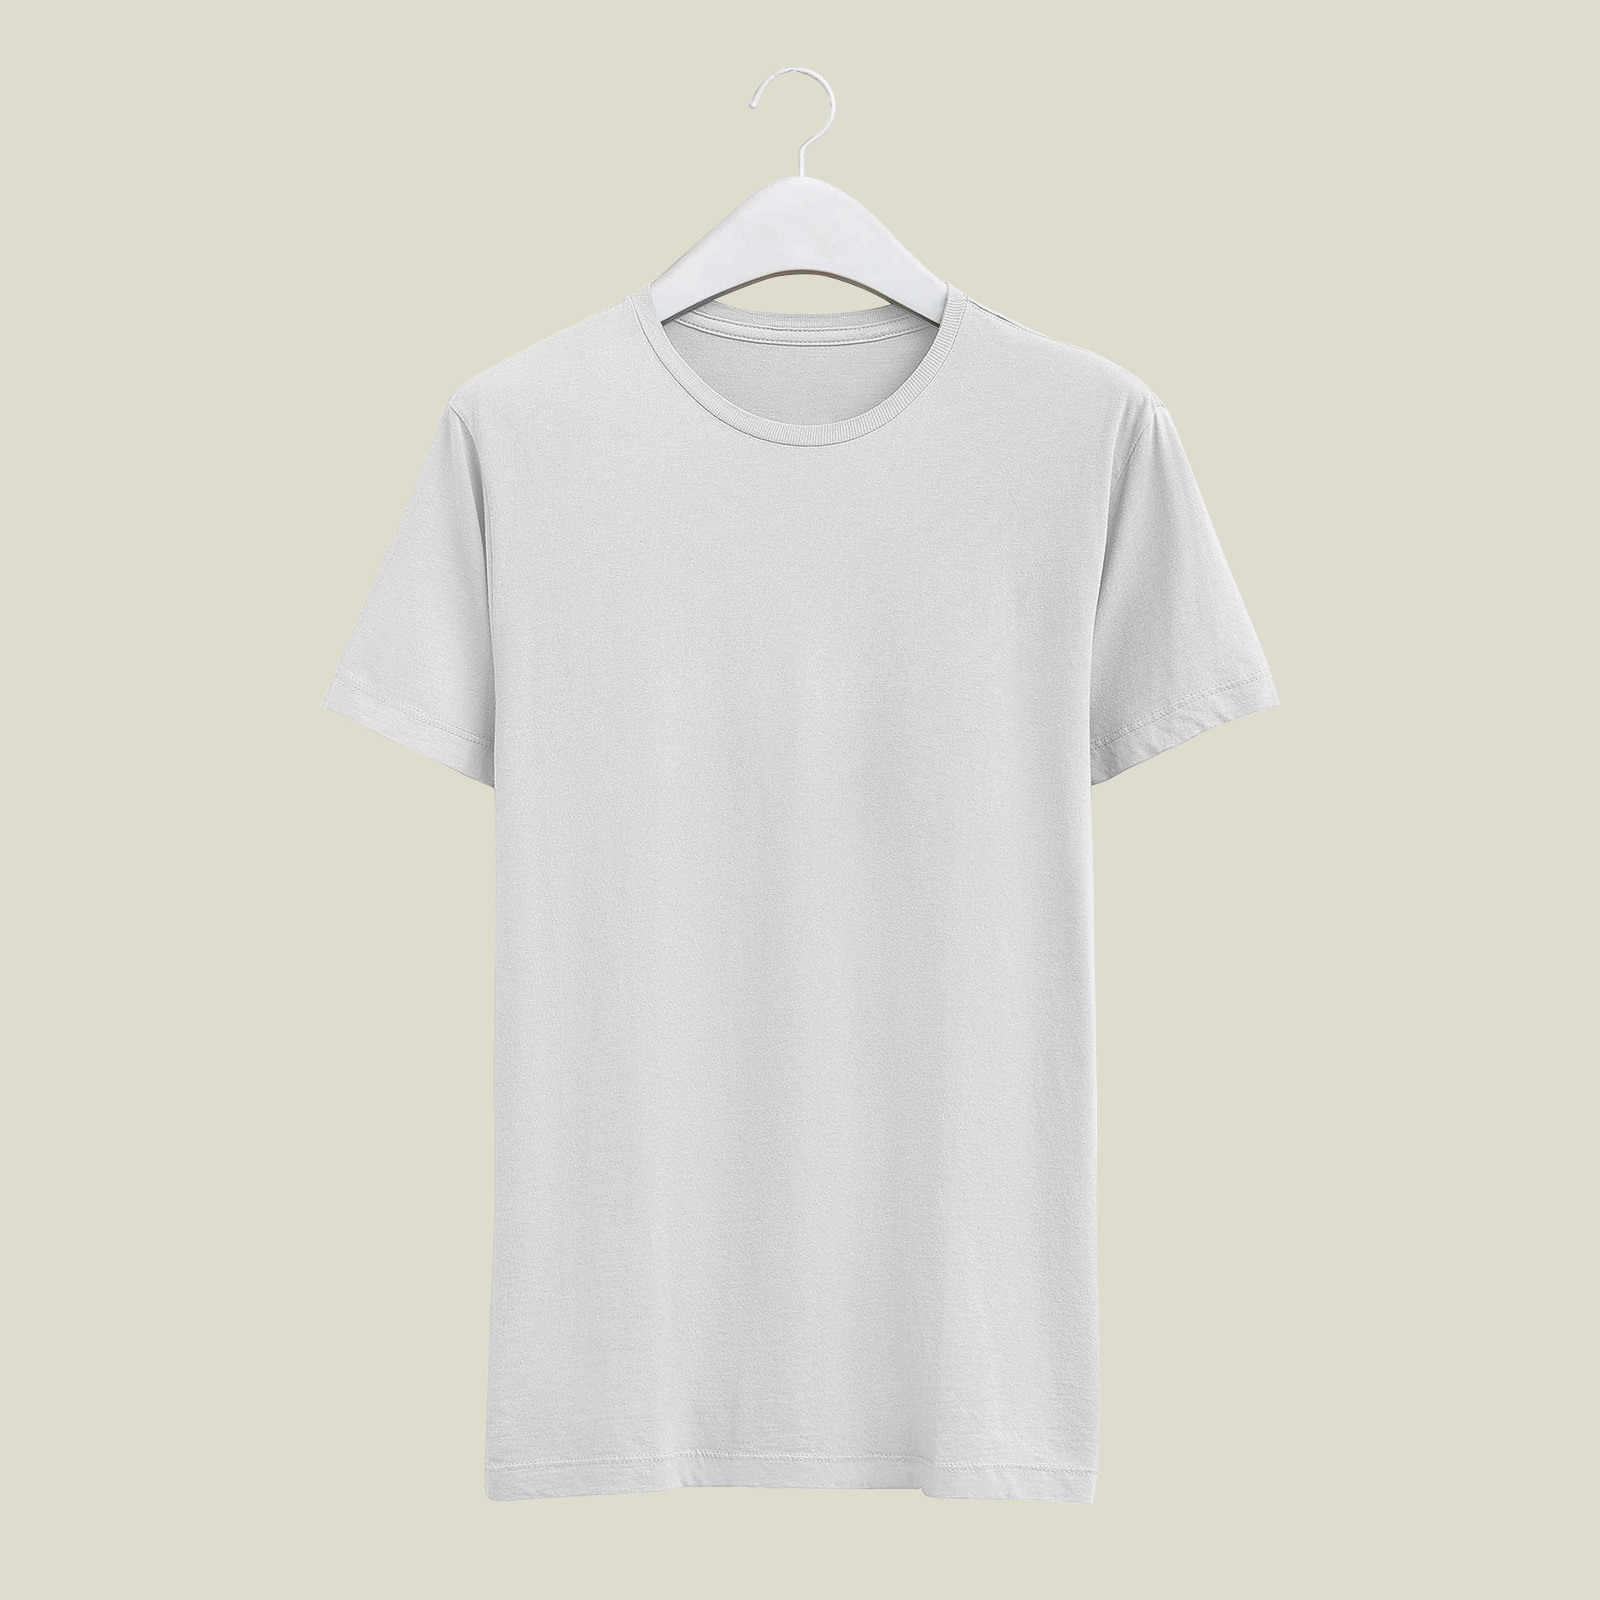 Online T-shirt & Apparel Mockup Generator | Mockup Mark